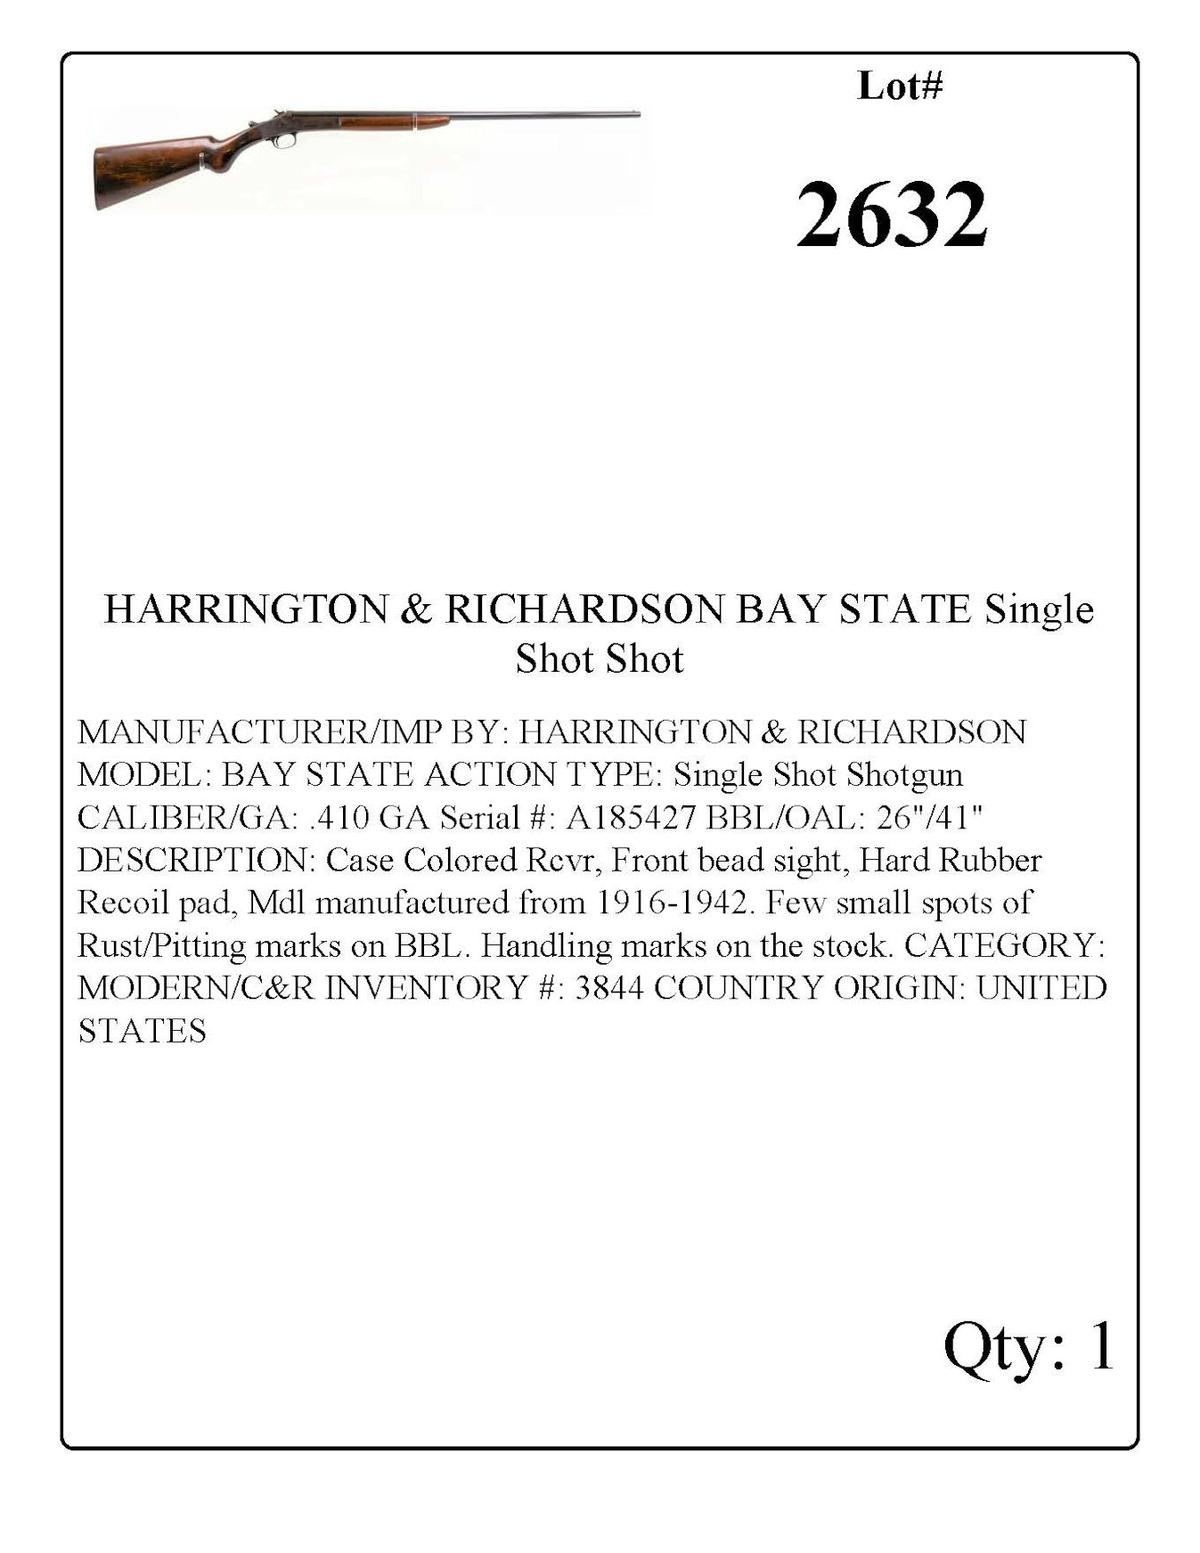 HARRINGTON & RICHARDSON BAY STATE Single Shot Shotgun